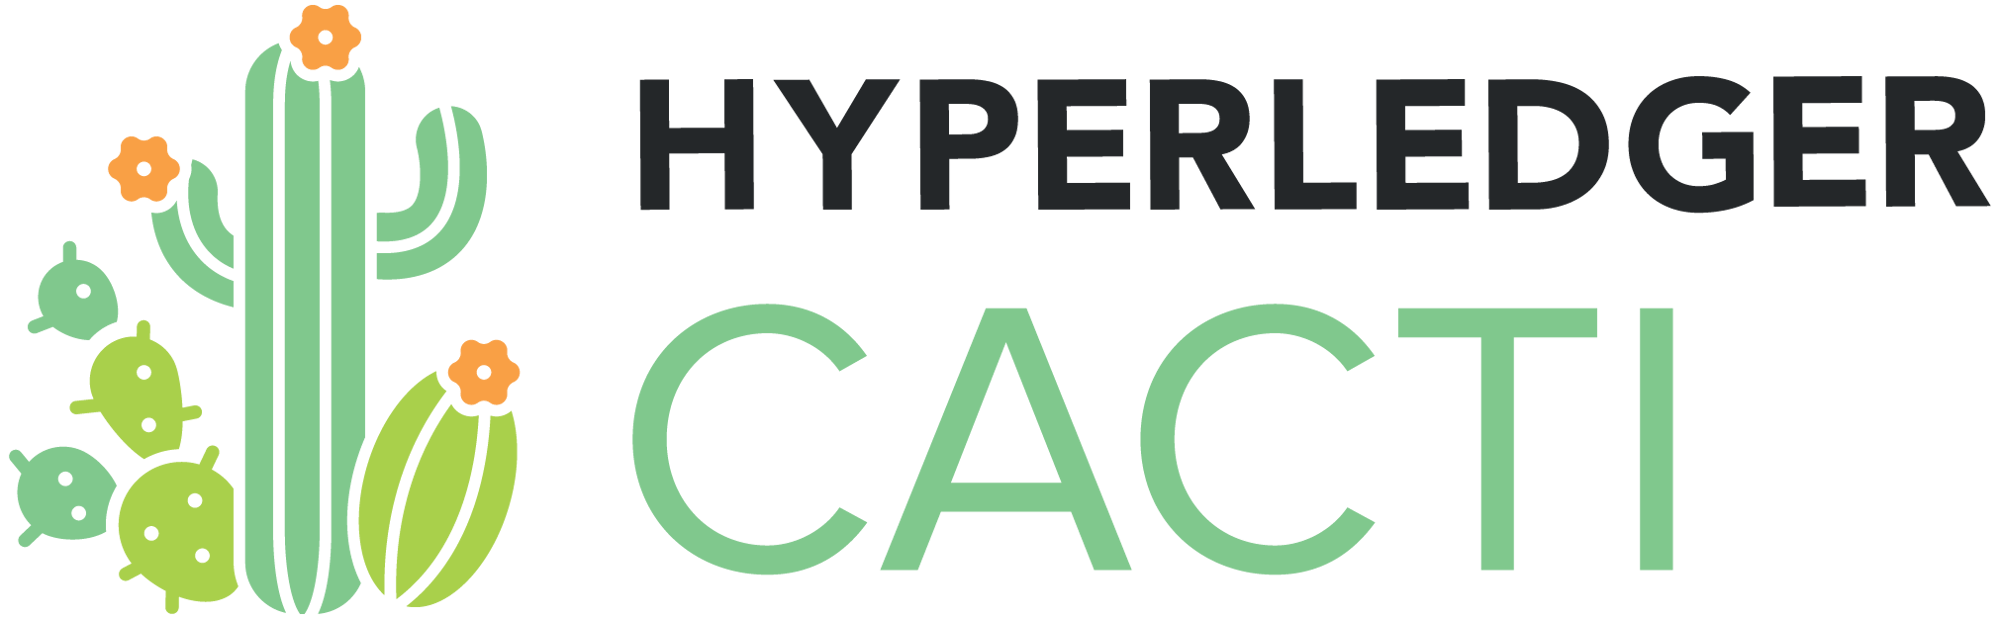 Hyperledger_Cacti